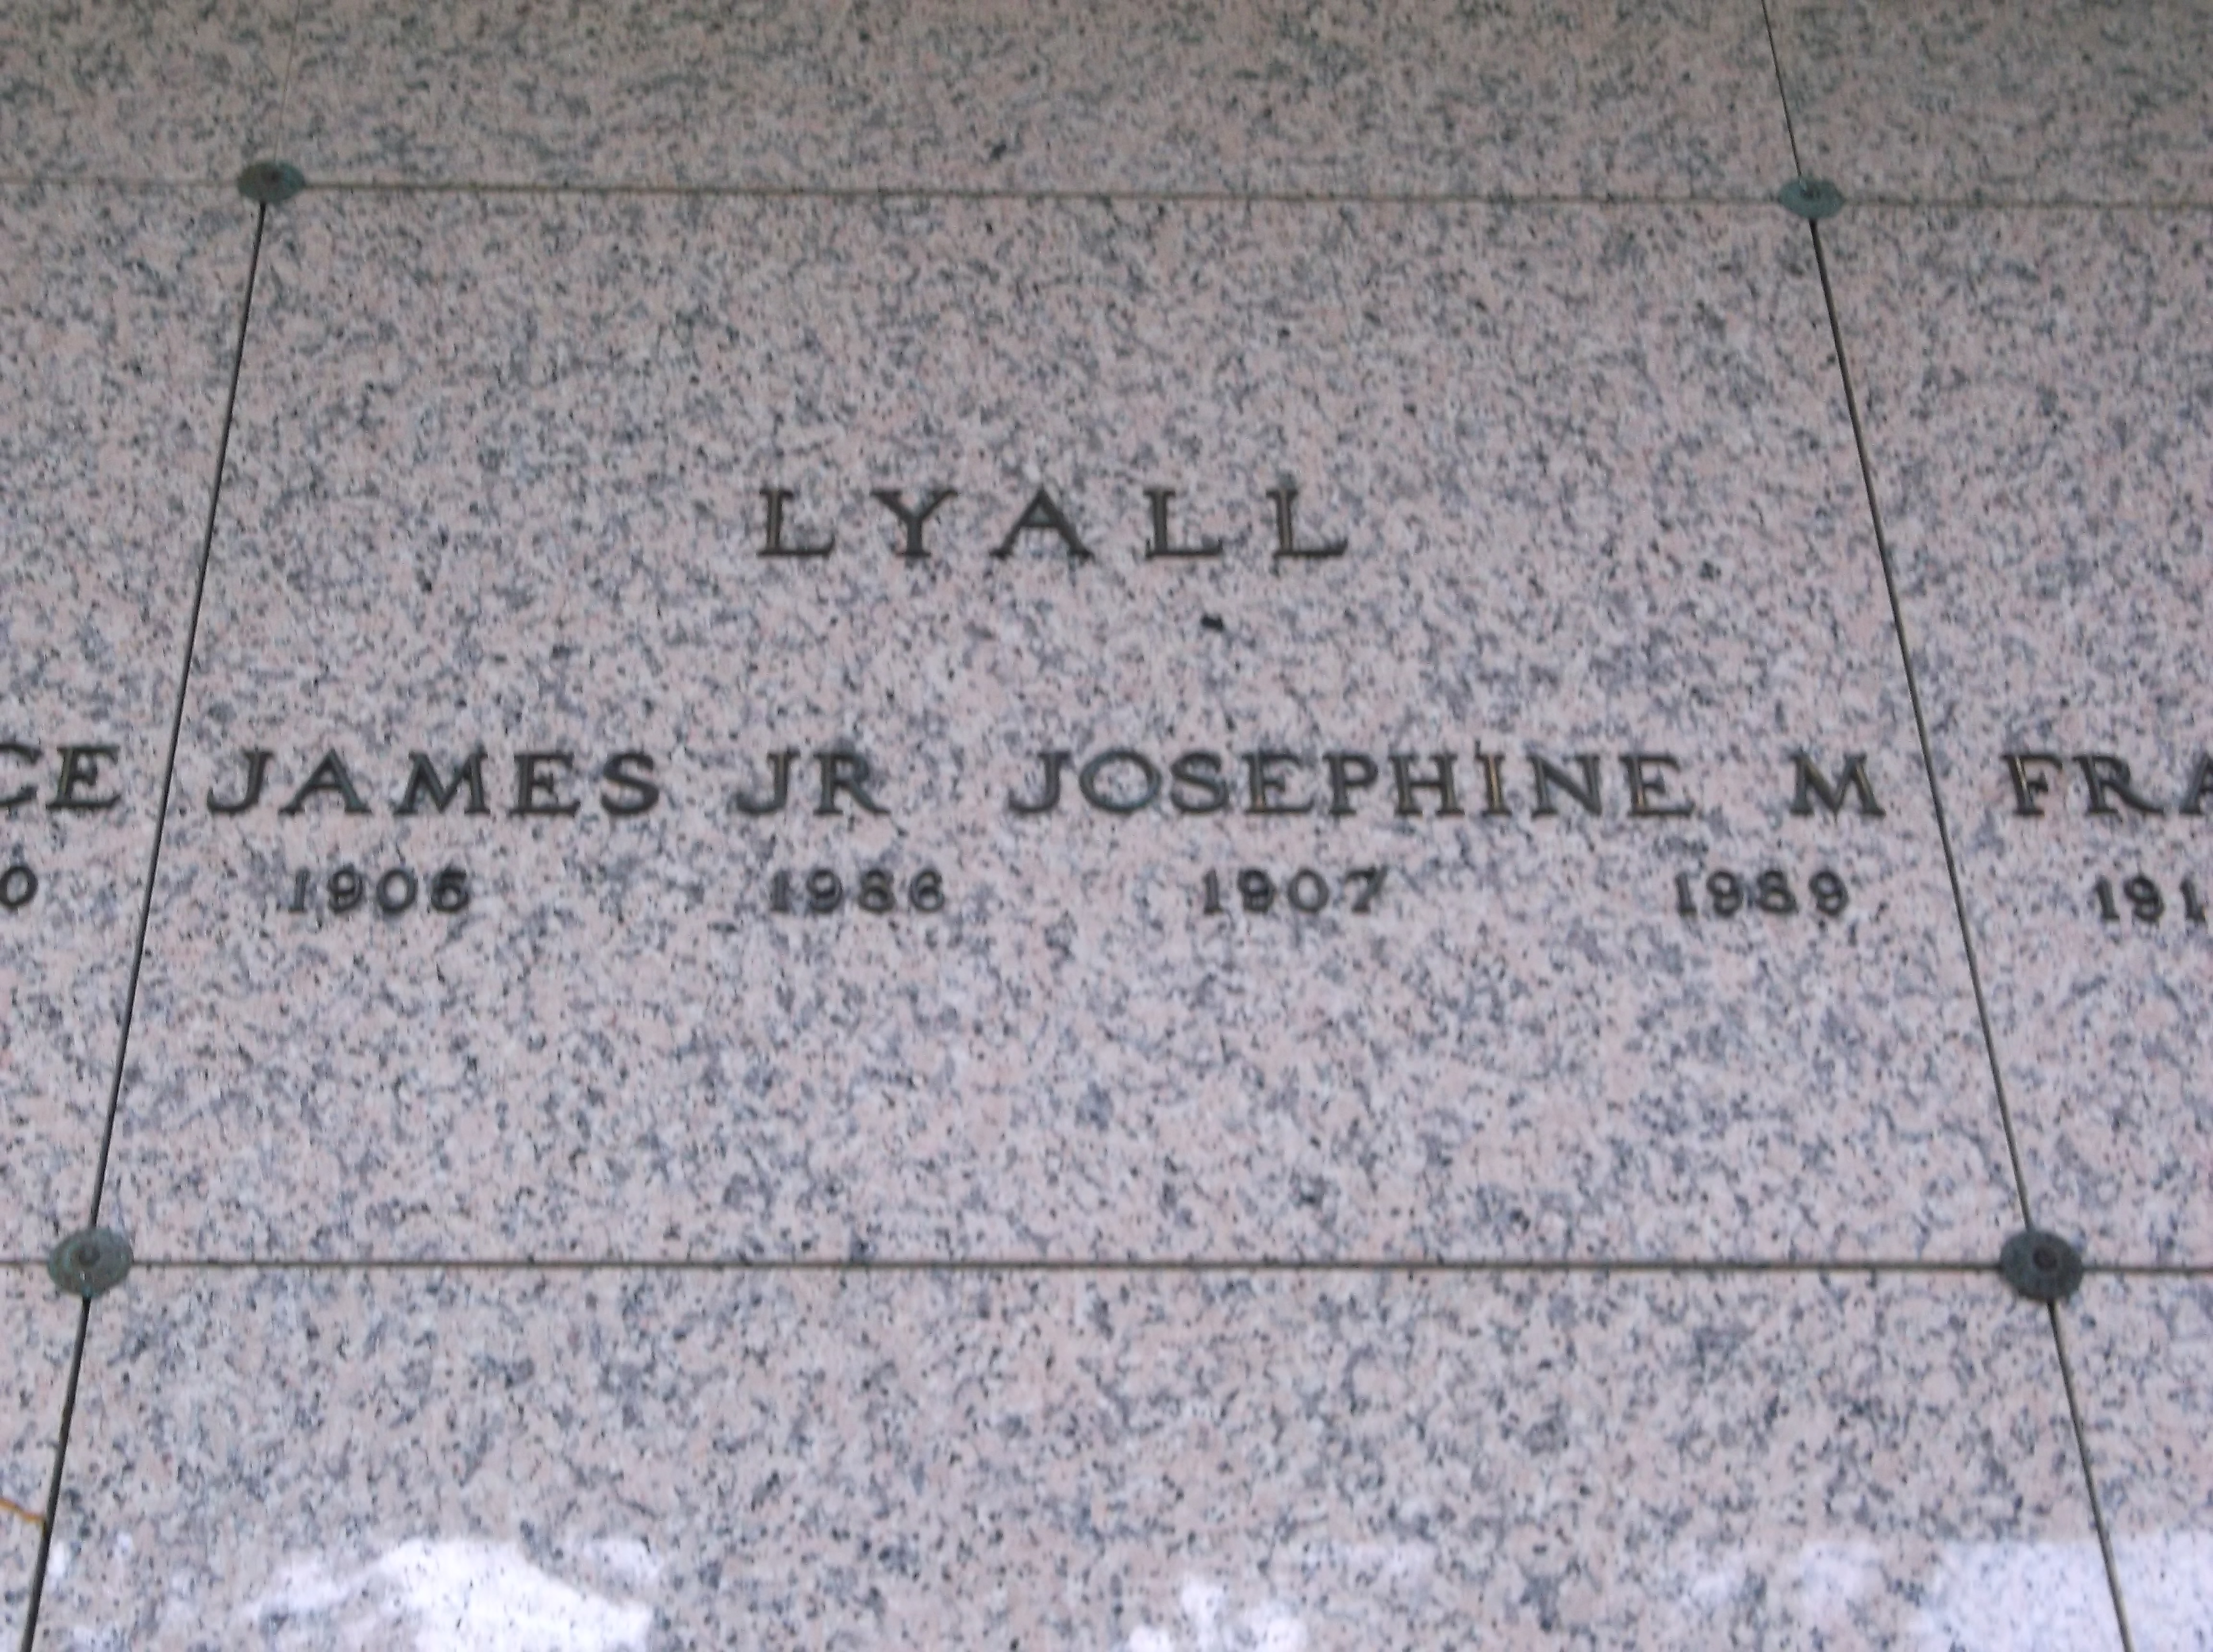 James Lyall, Jr